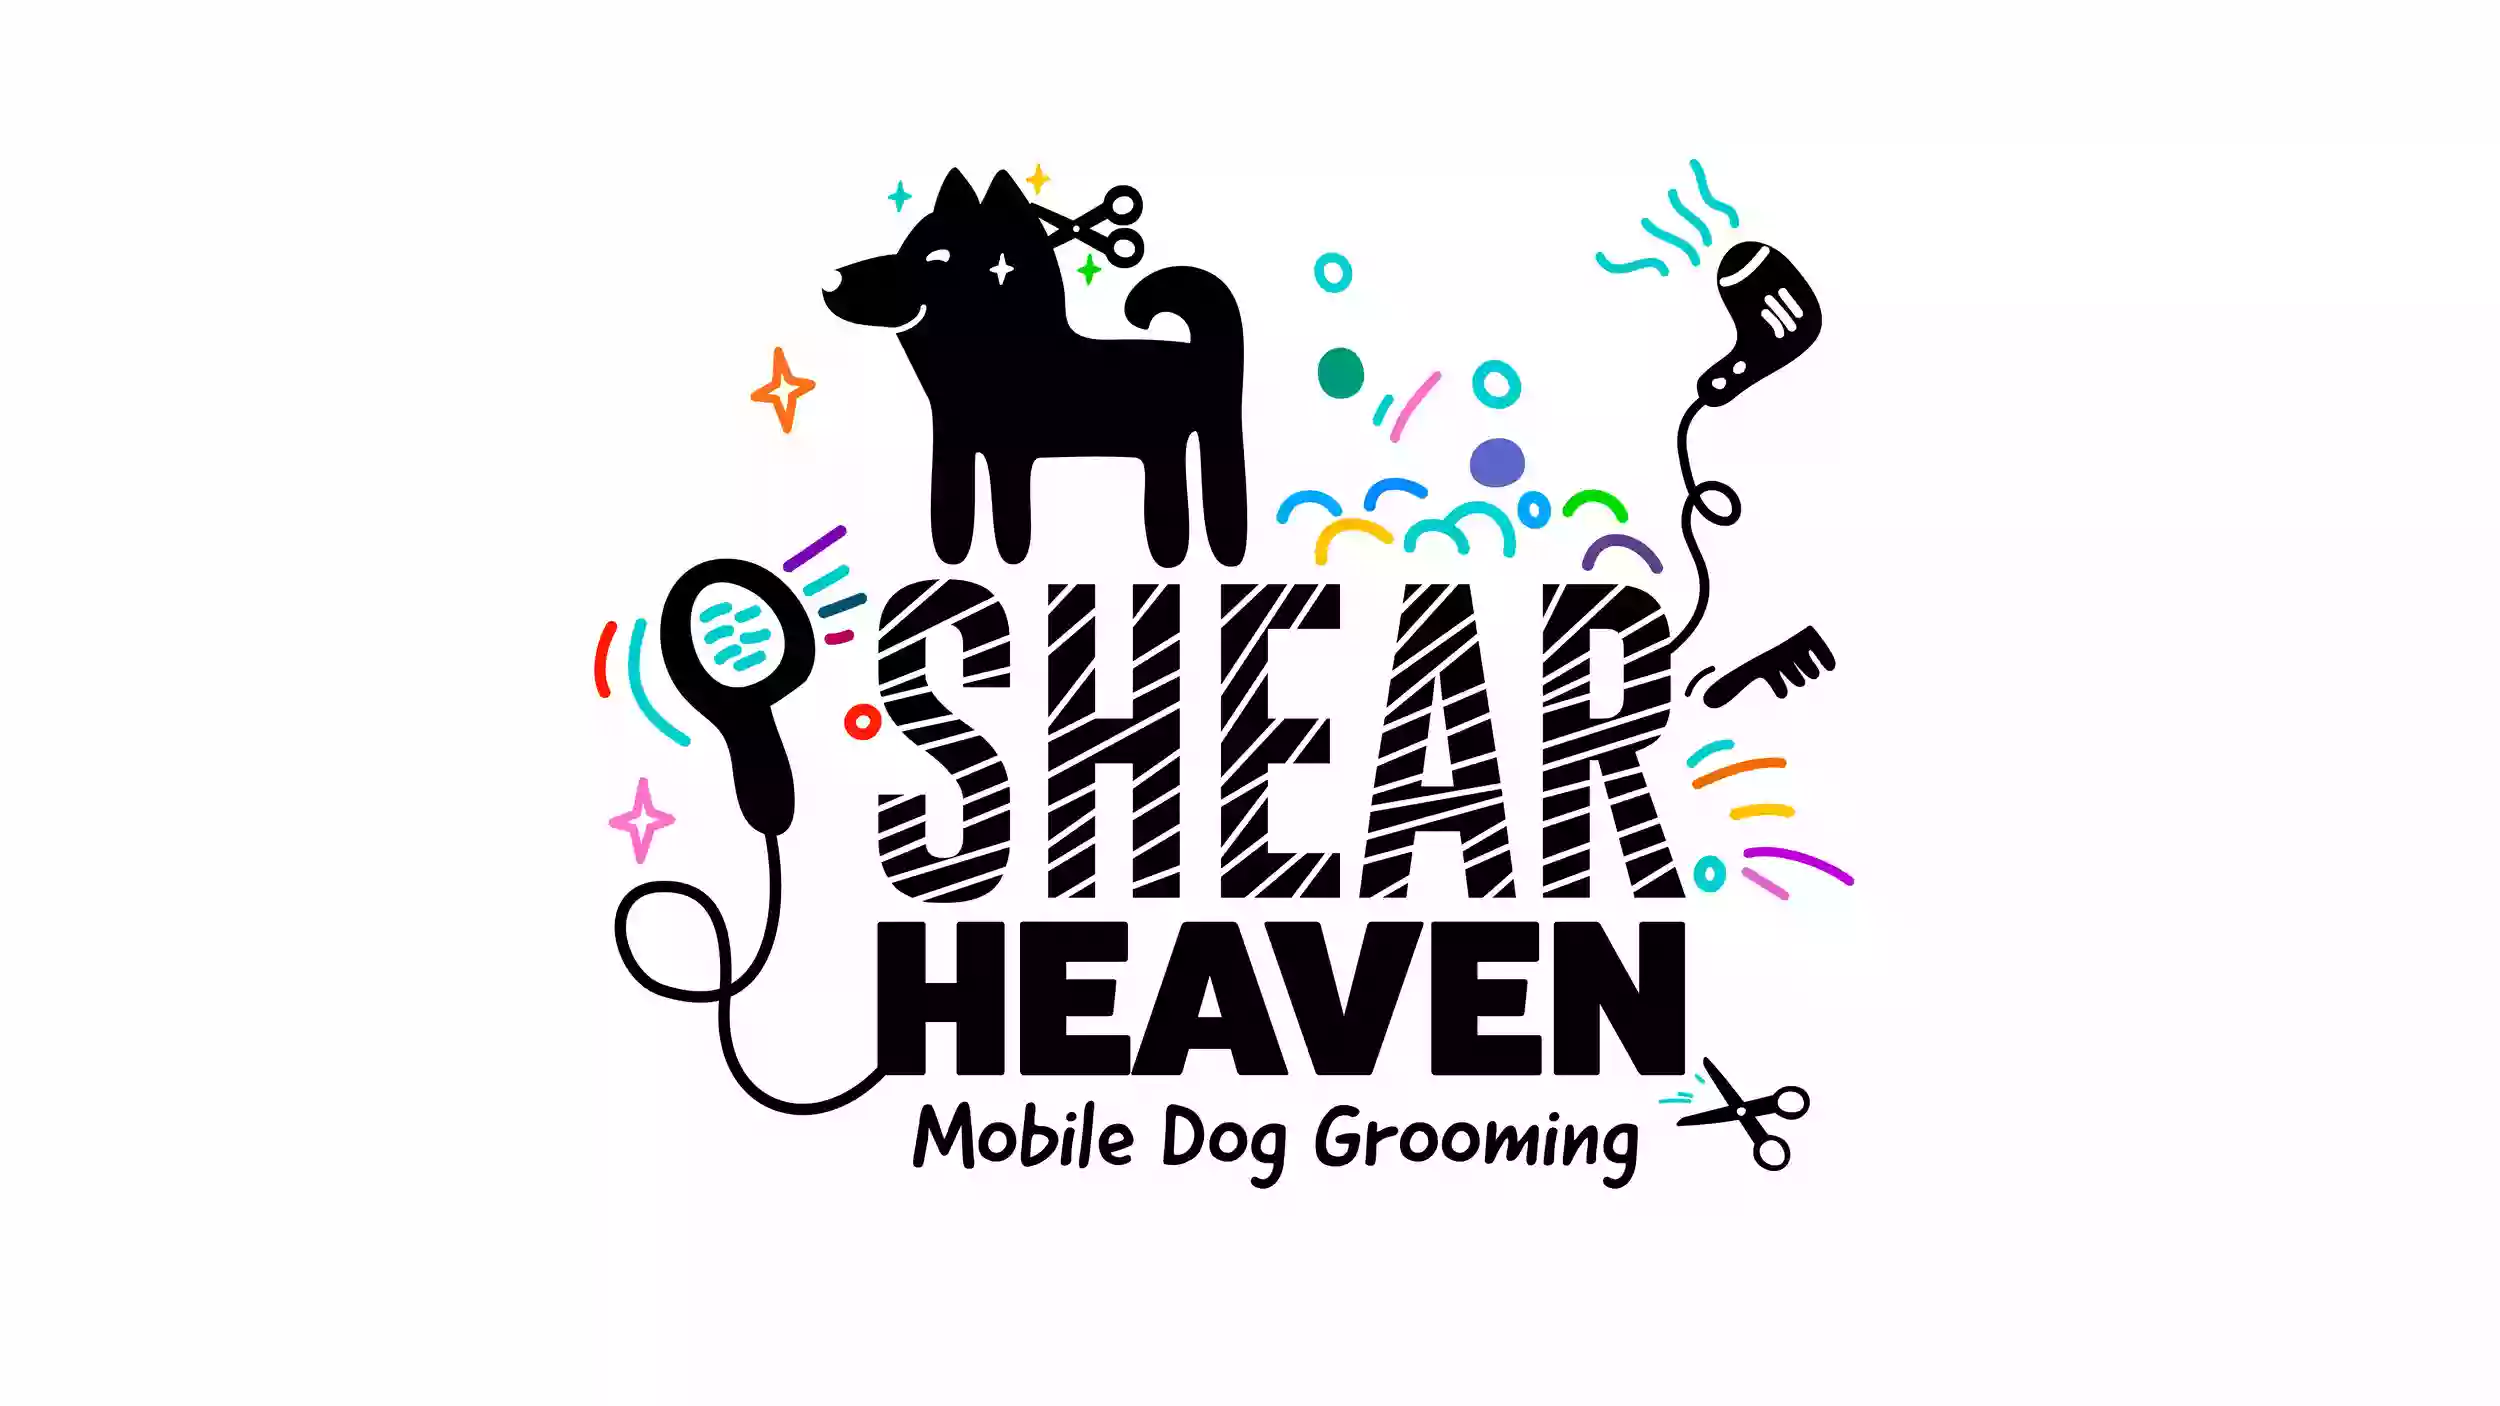 Shear Heaven mobile dog grooming